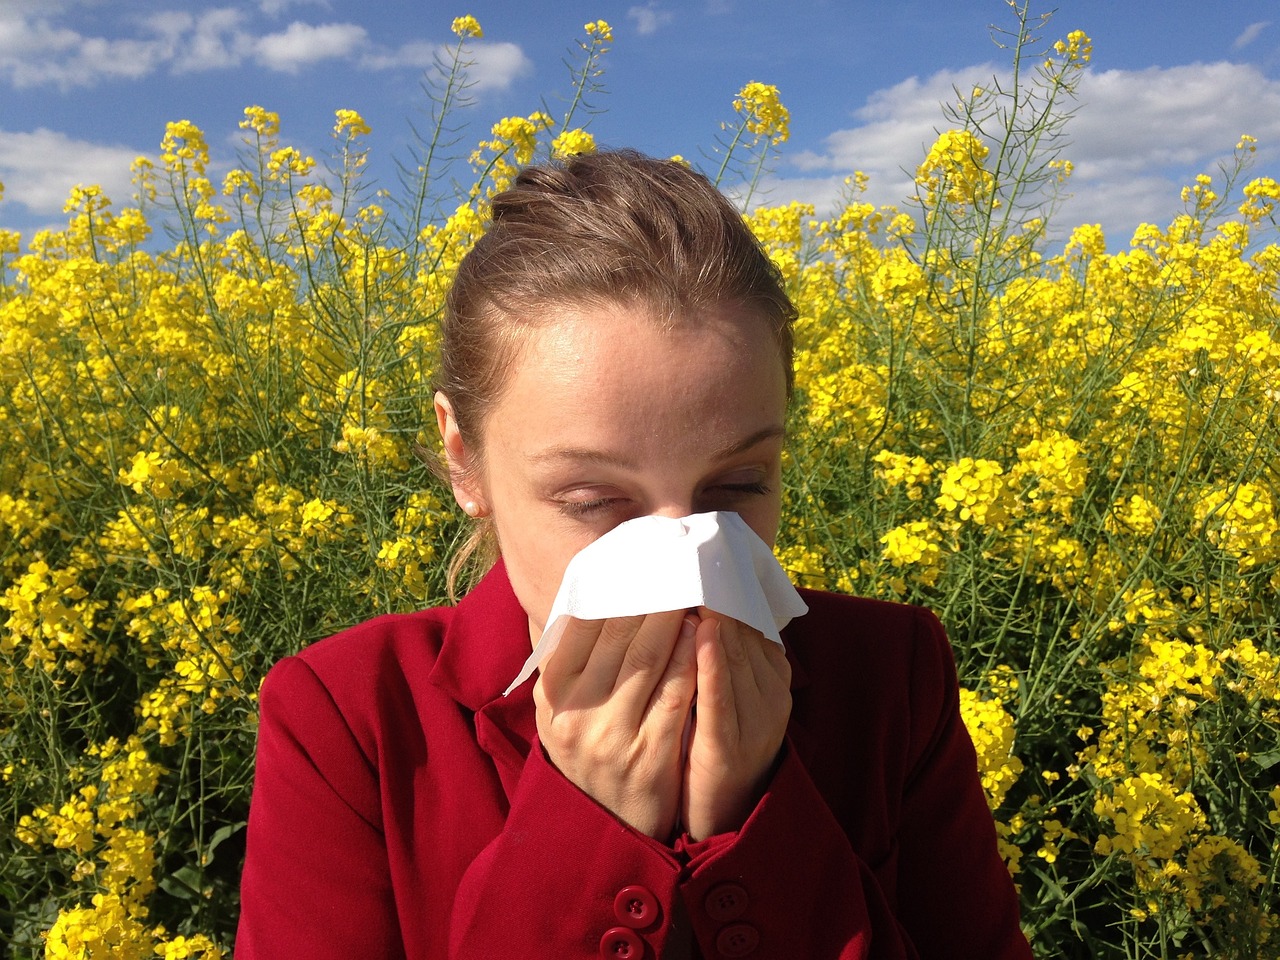 You are currently viewing Συμβουλές για την πρόληψη και διαχείριση της αλλεργίας: Πώς να αναγνωρίσετε τα συμπτώματα και να αντιμετωπίσετε αλλεργικές αντιδράσεις